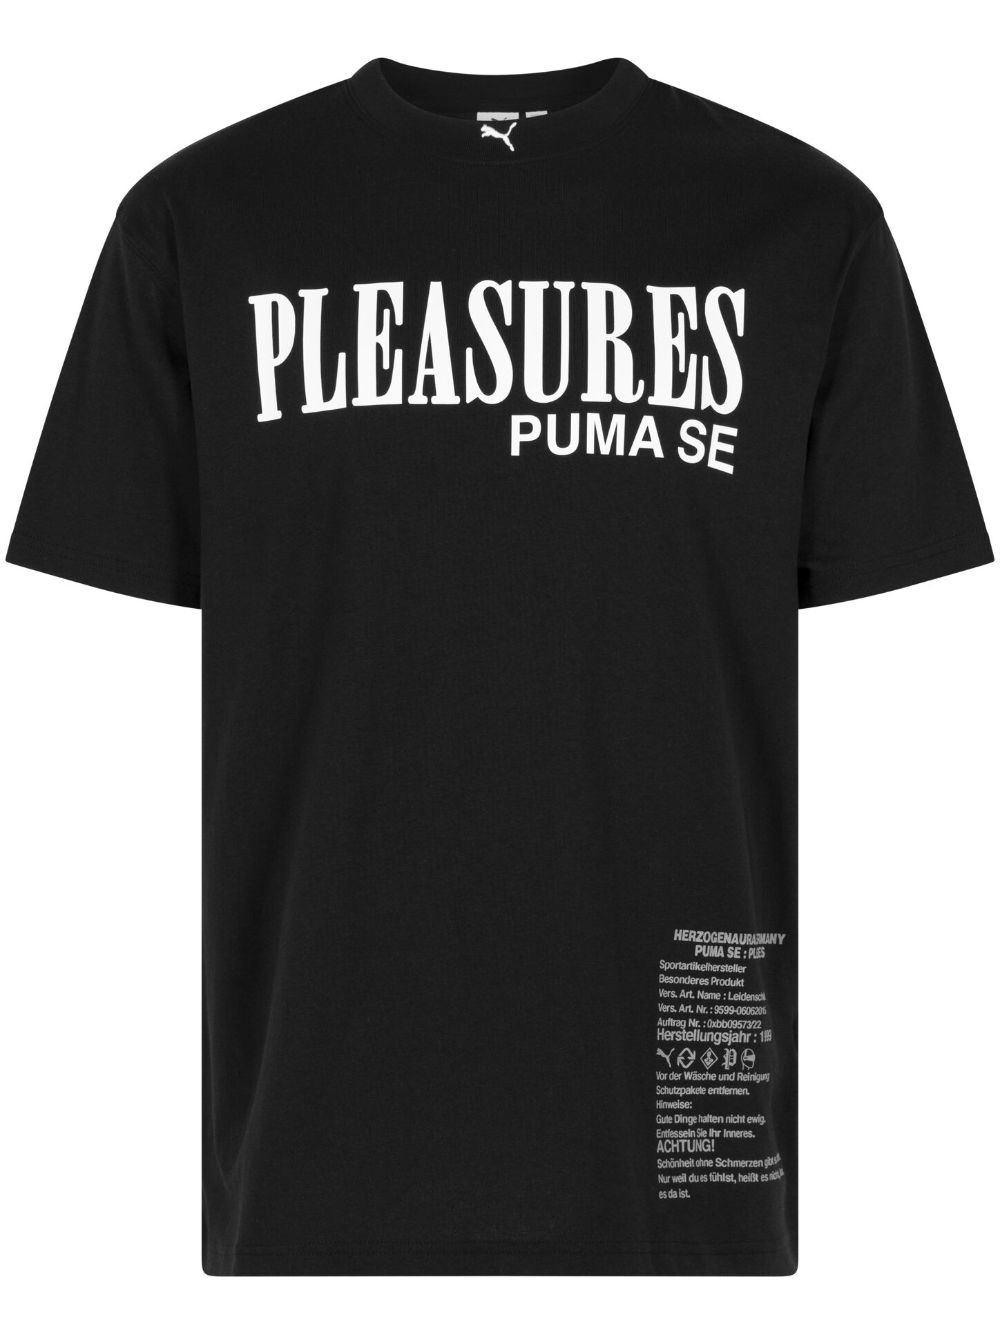 x Pleasures Typo cotton T-shirt - 1